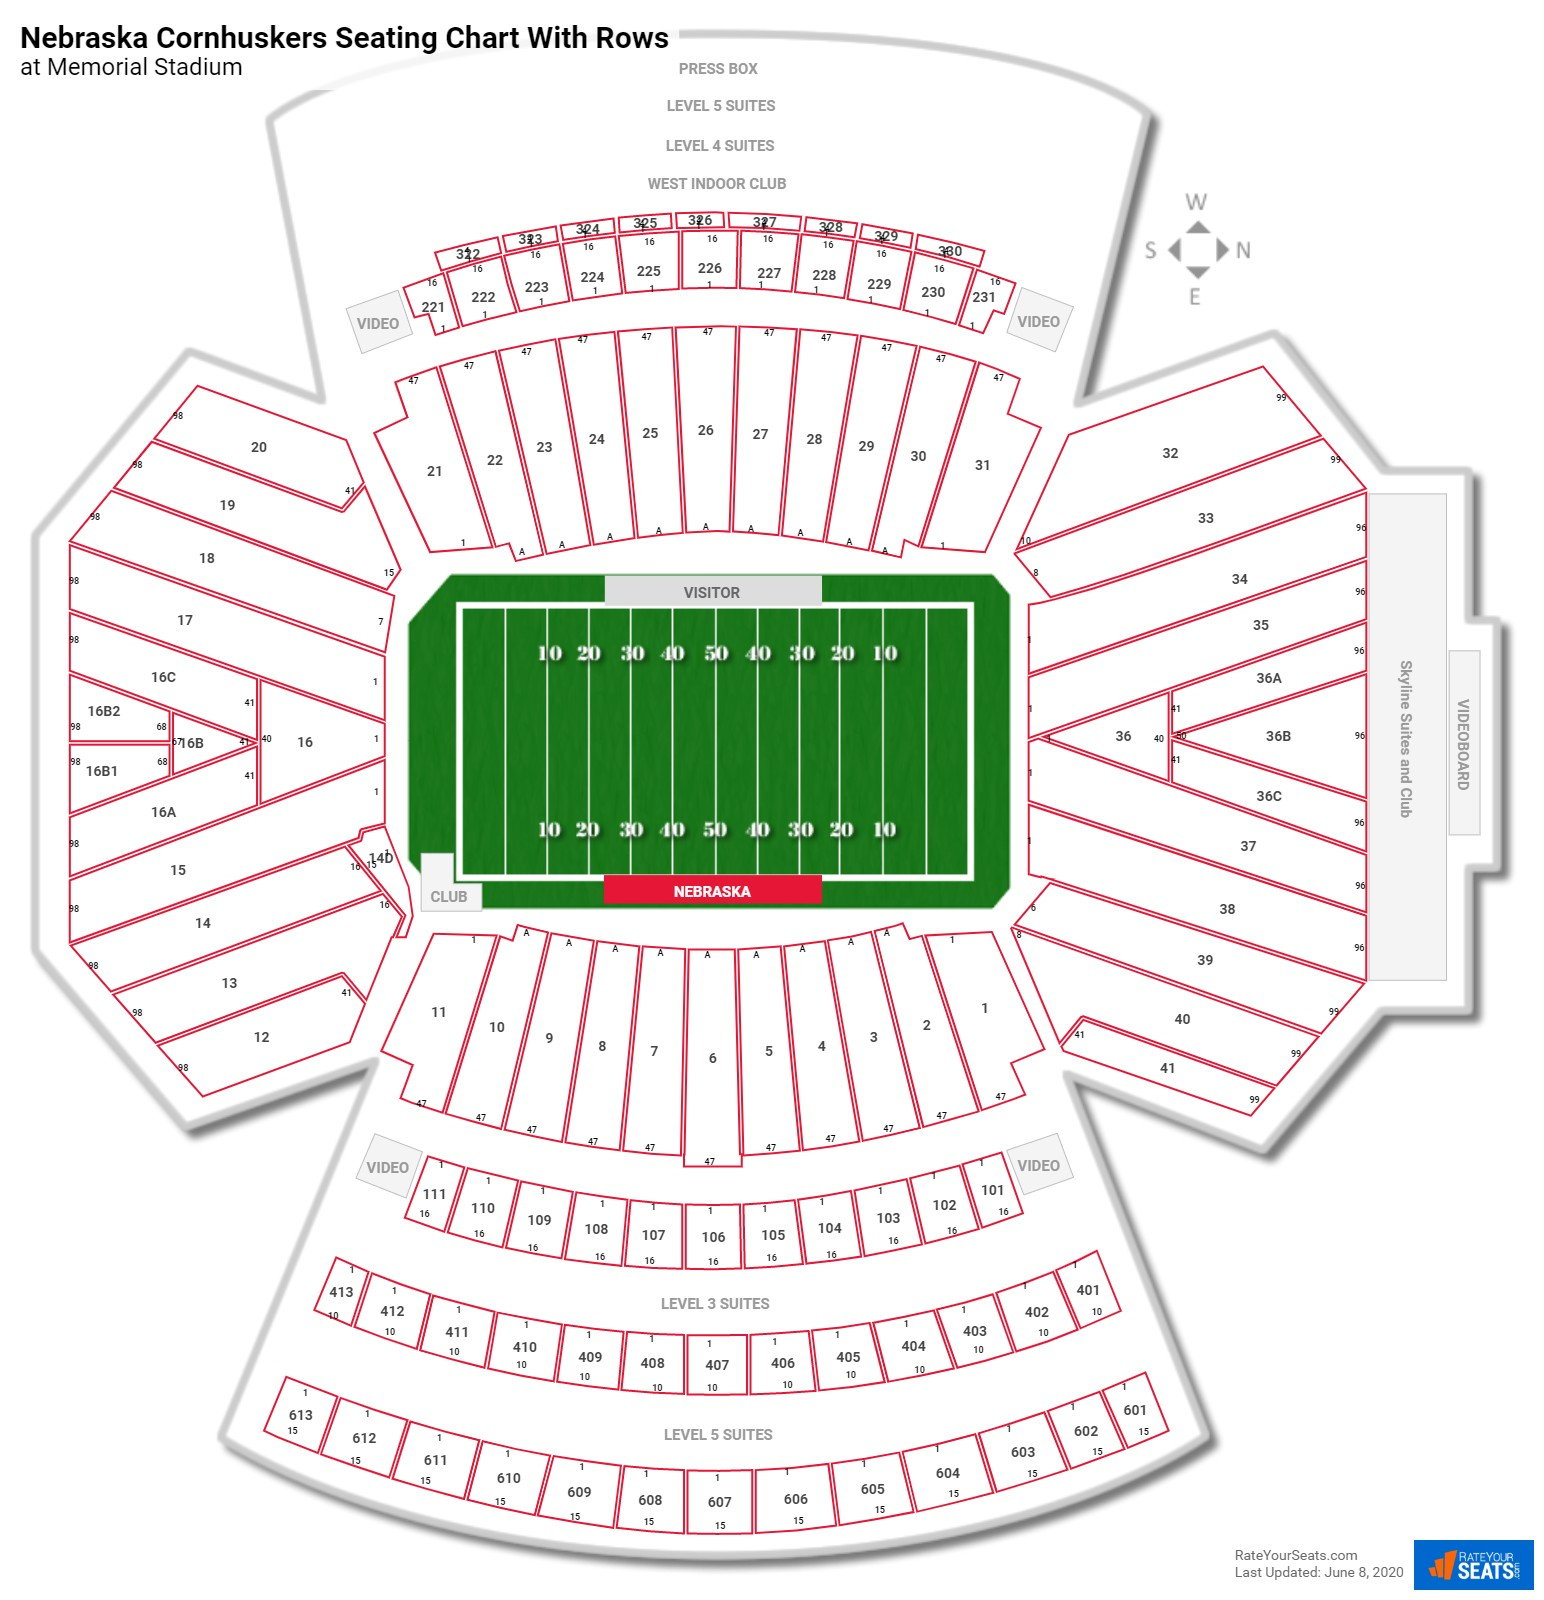 Memorial Stadium (Nebraska) Seating Charts - RateYourSeats.com